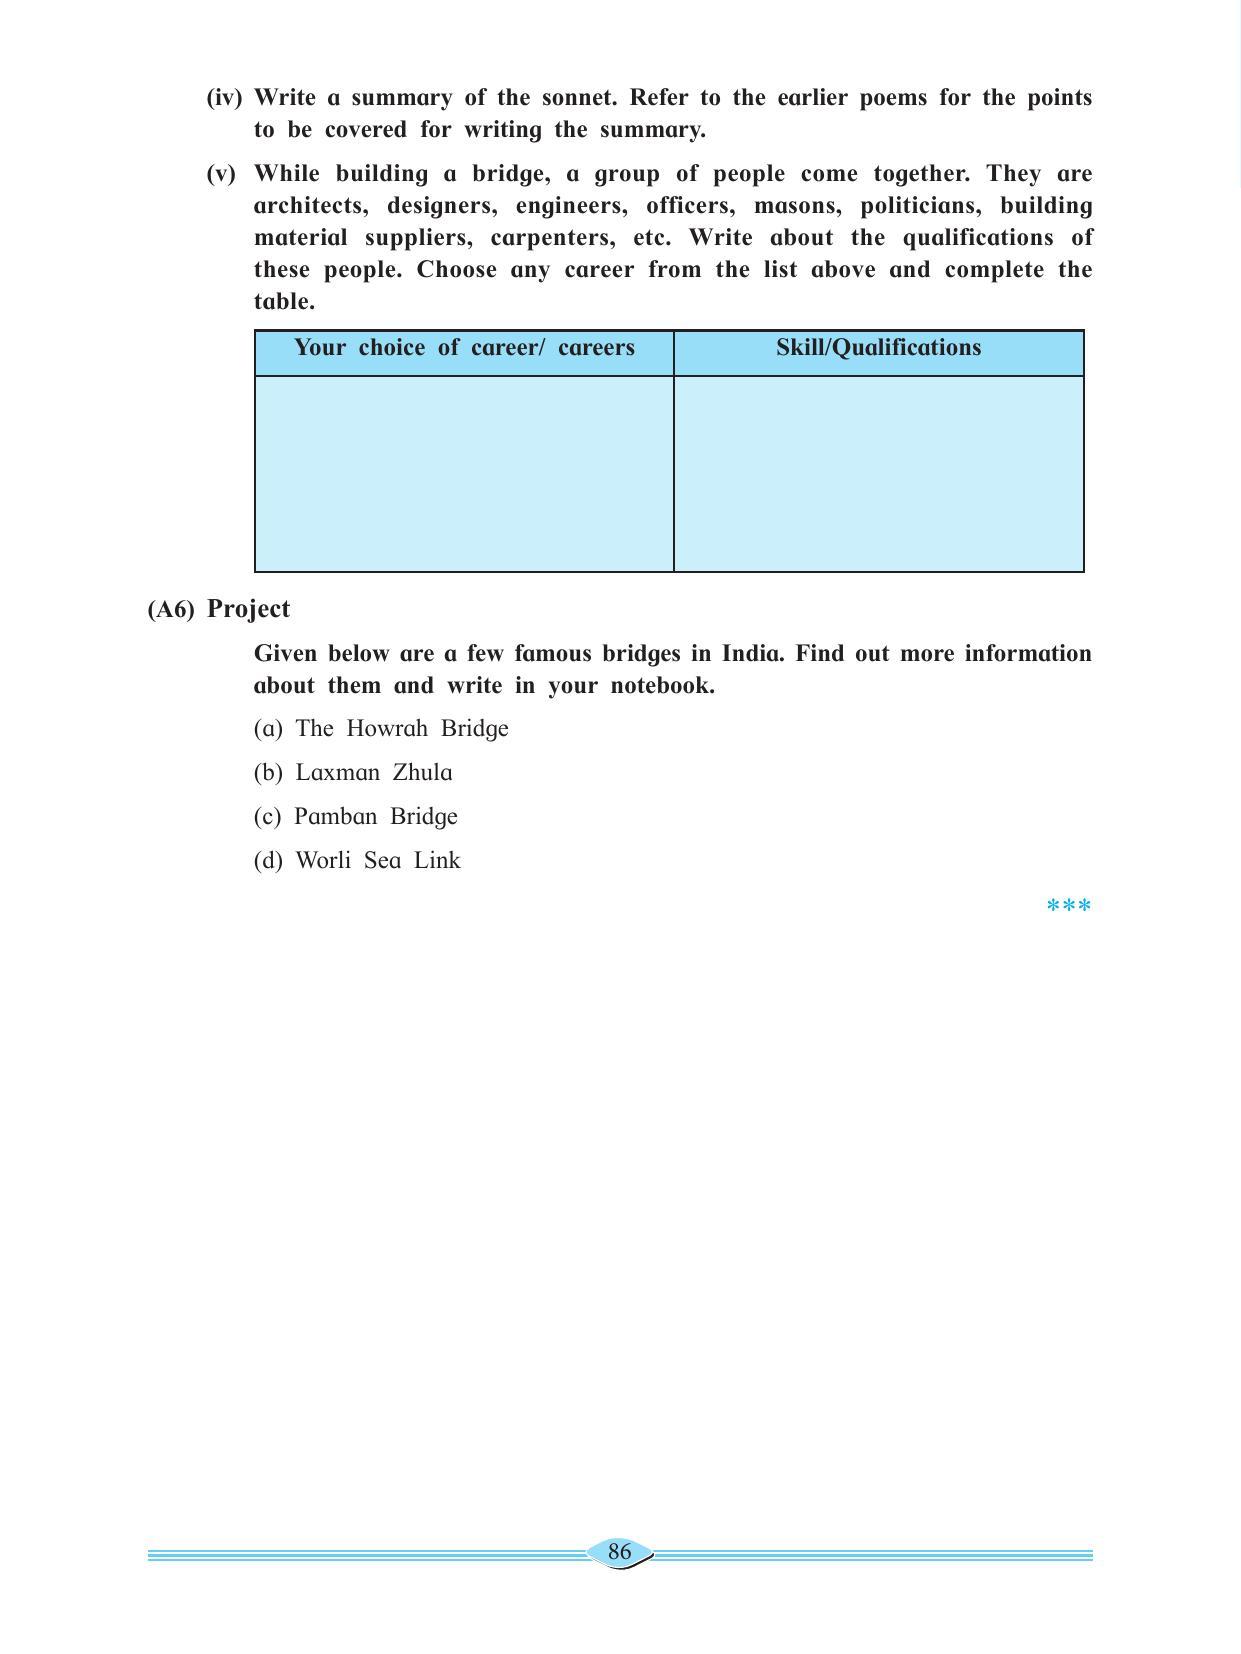 Maharashtra Board Class 11 English Textbook - Page 100